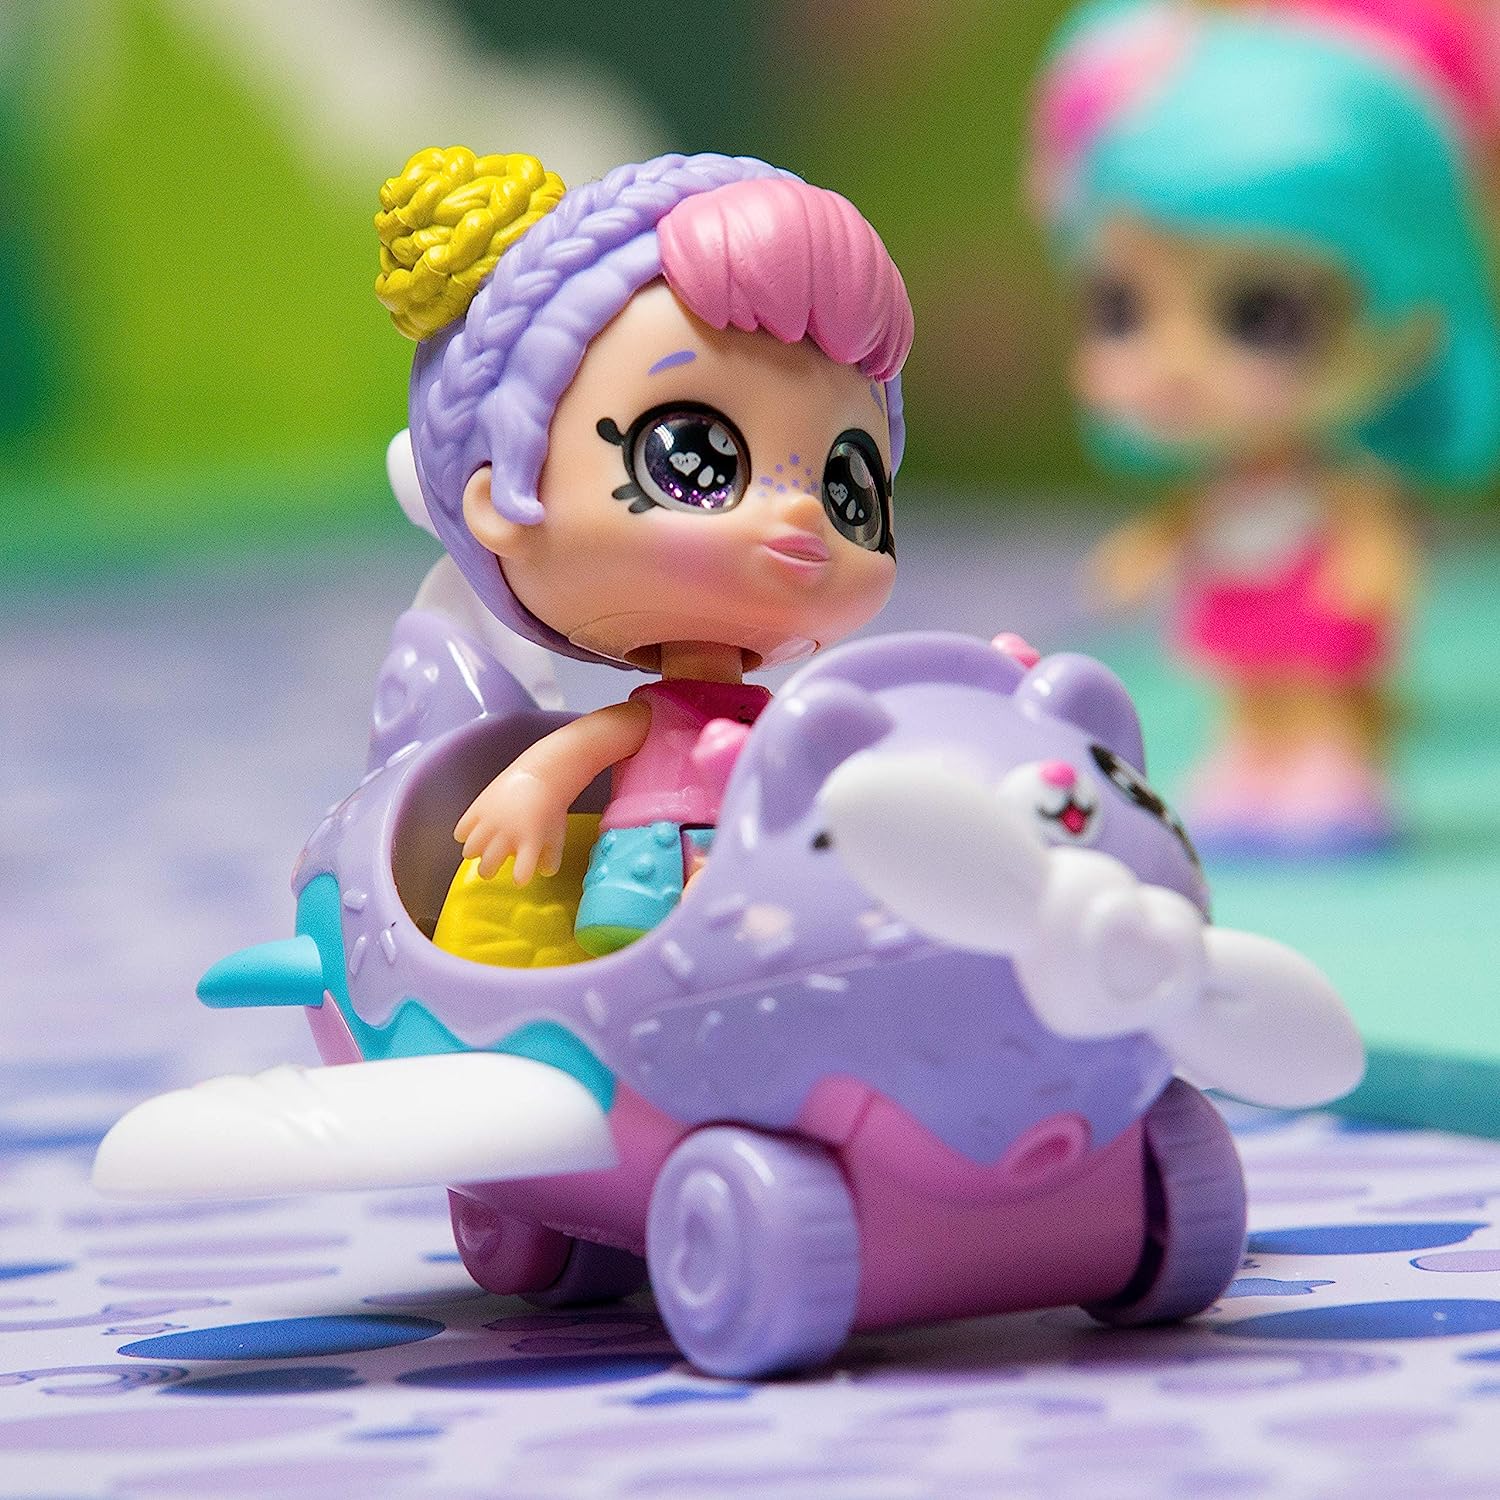 Kindi Kids Minis - Rainbow Kate's Airplane - Collectible Vehicle and Posable Bobble Head Figurine 2pc